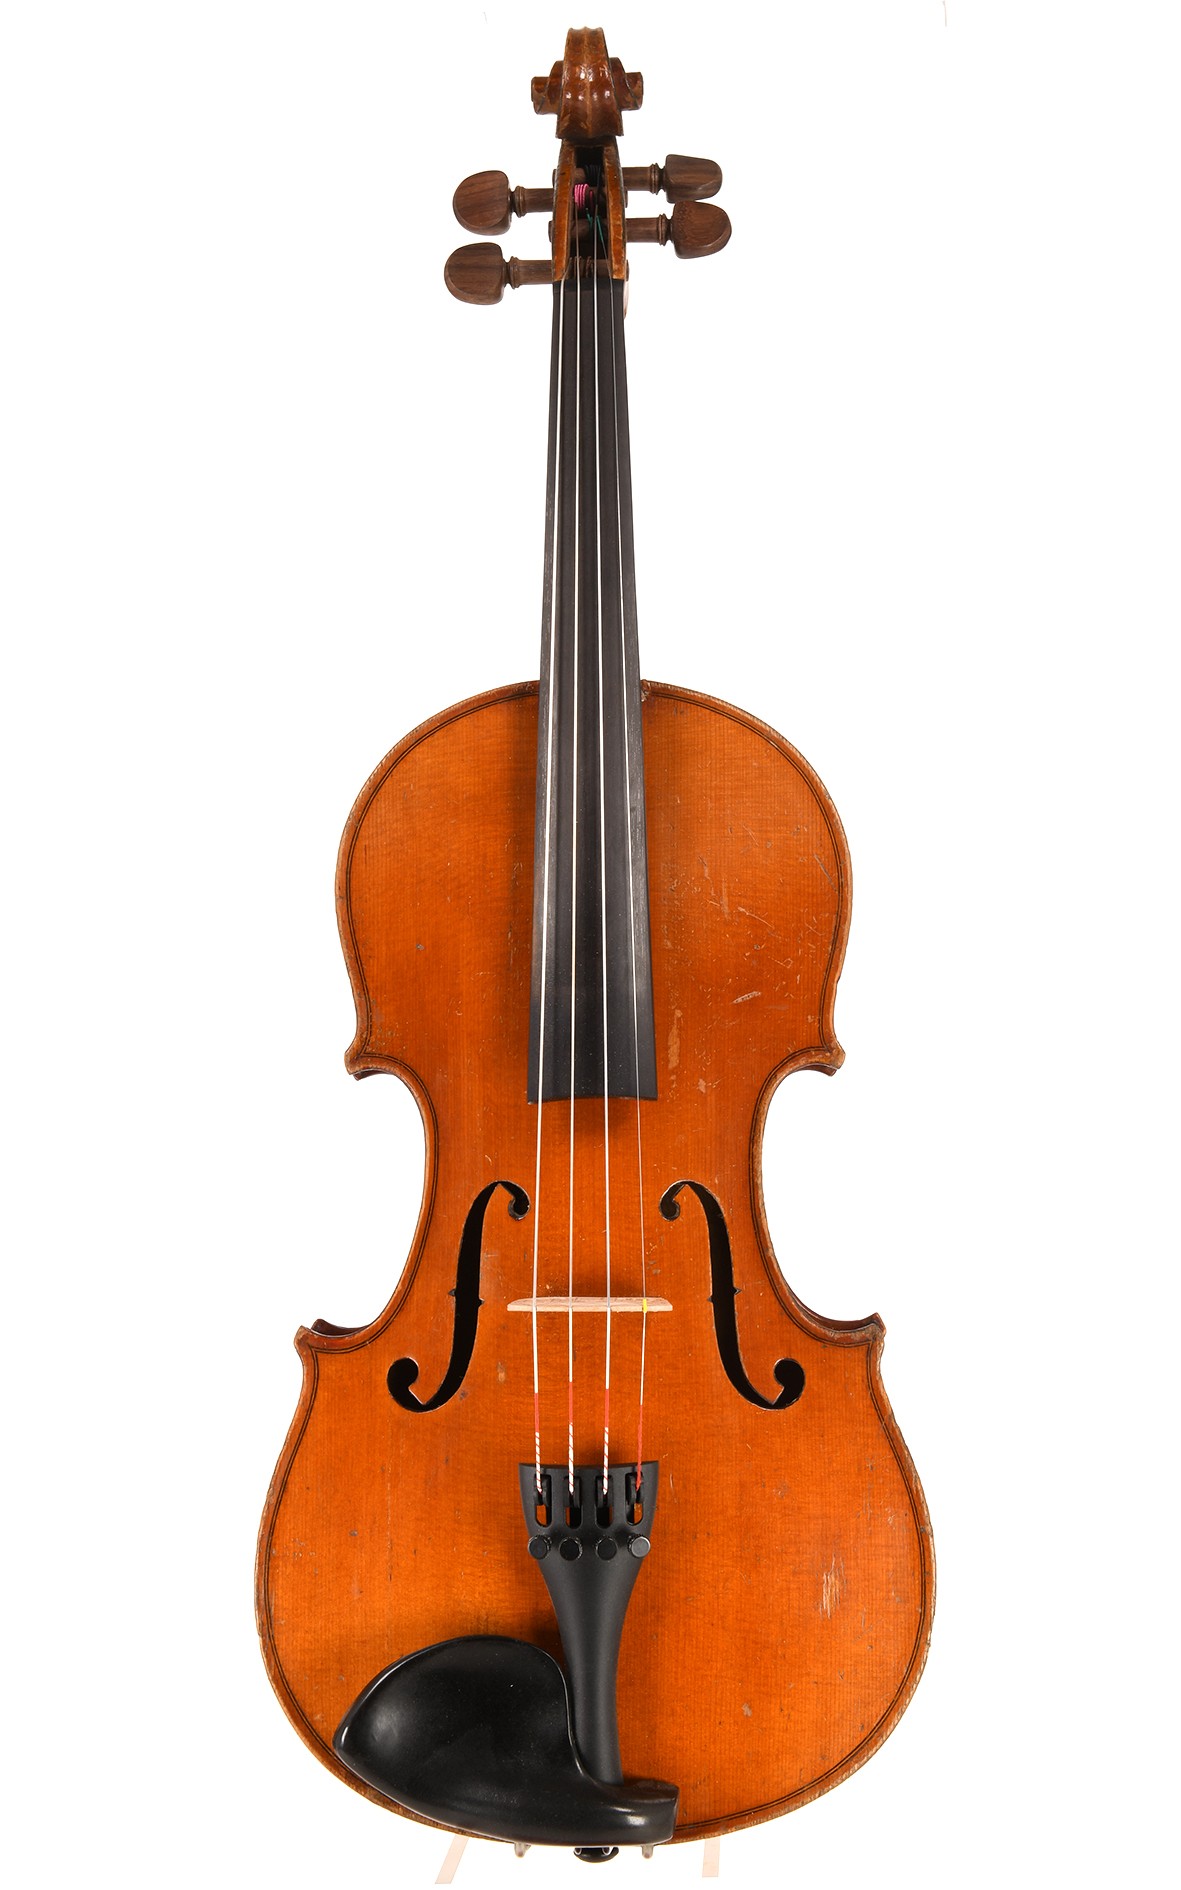 French violin by Laberte, Mirecourt